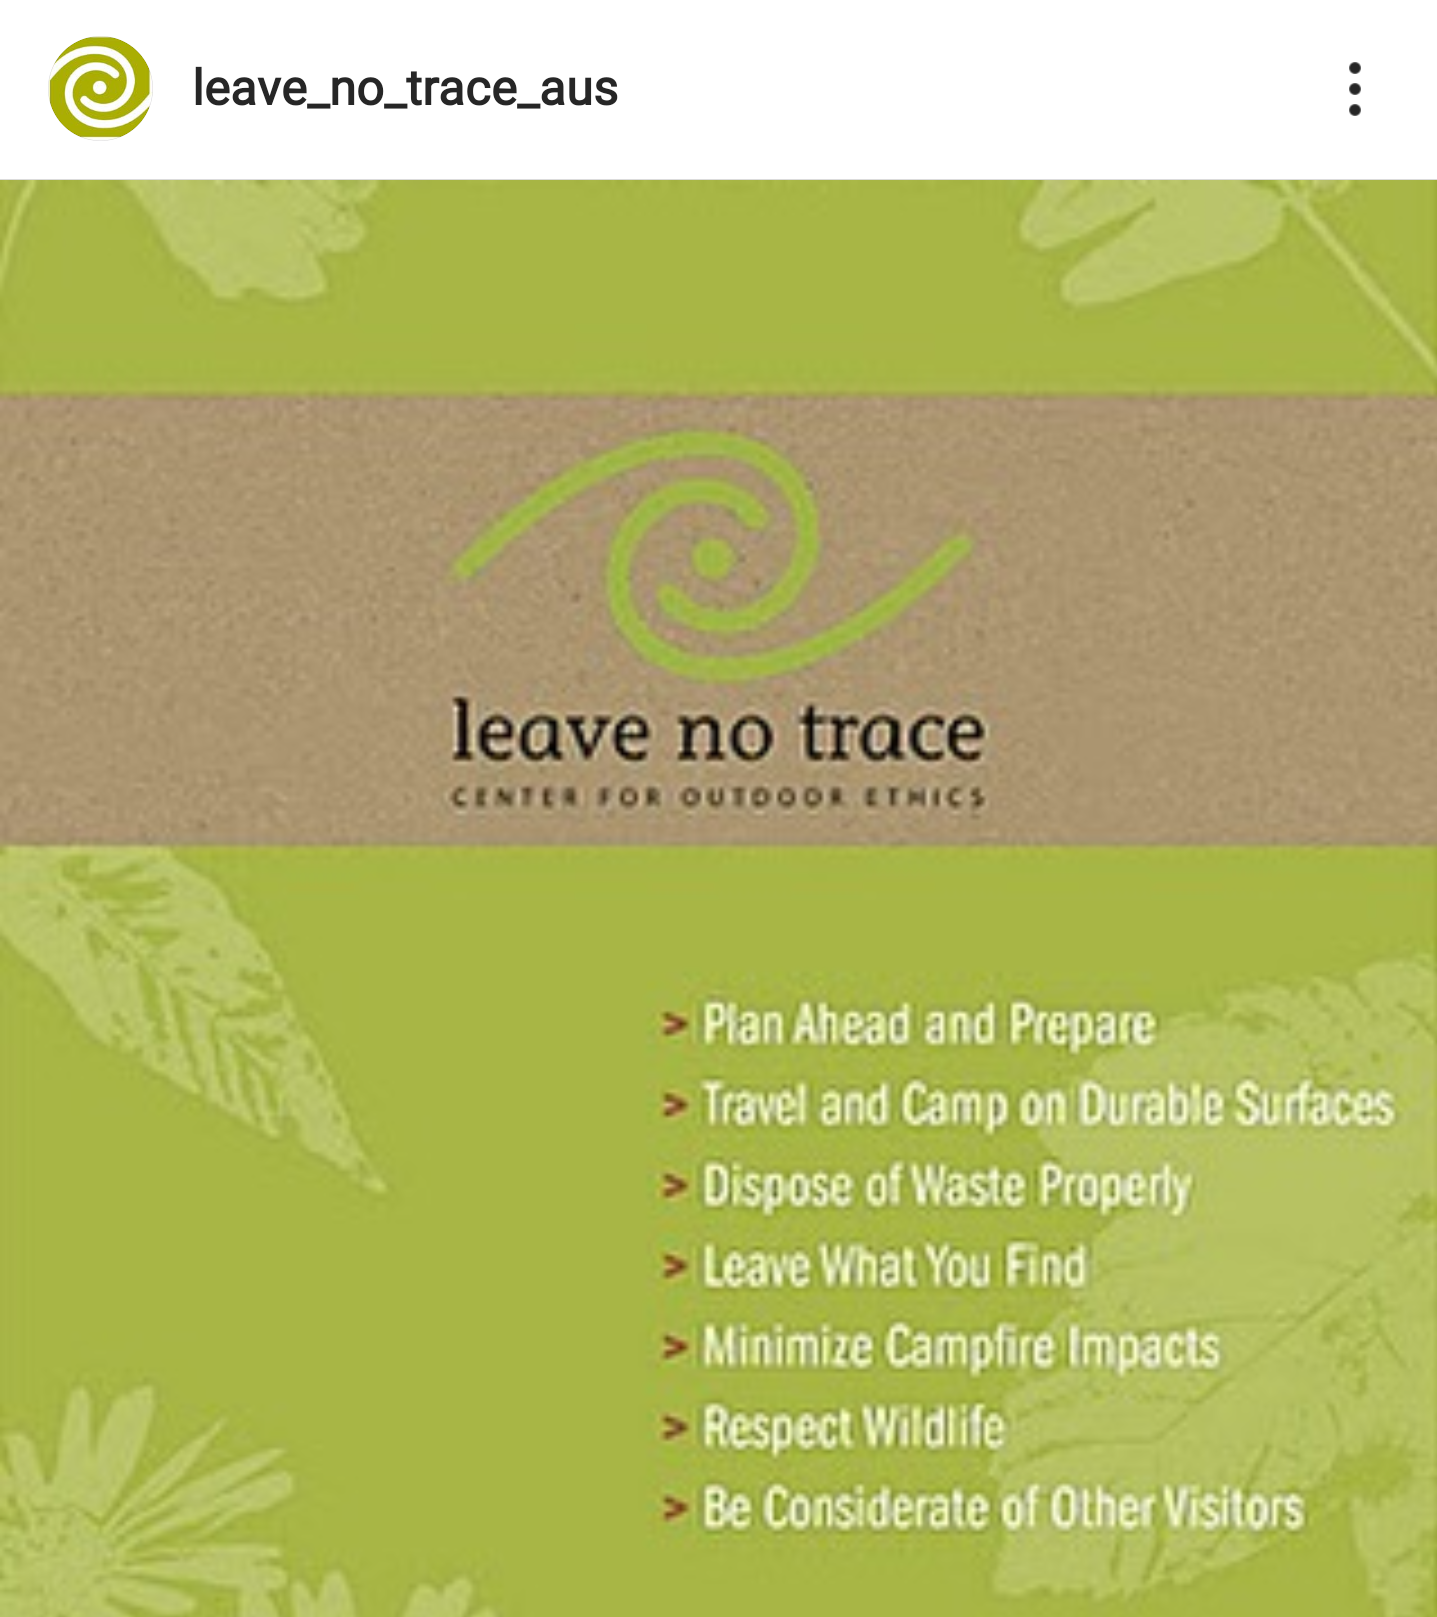 Instagram: @leave_no_trace_aus/